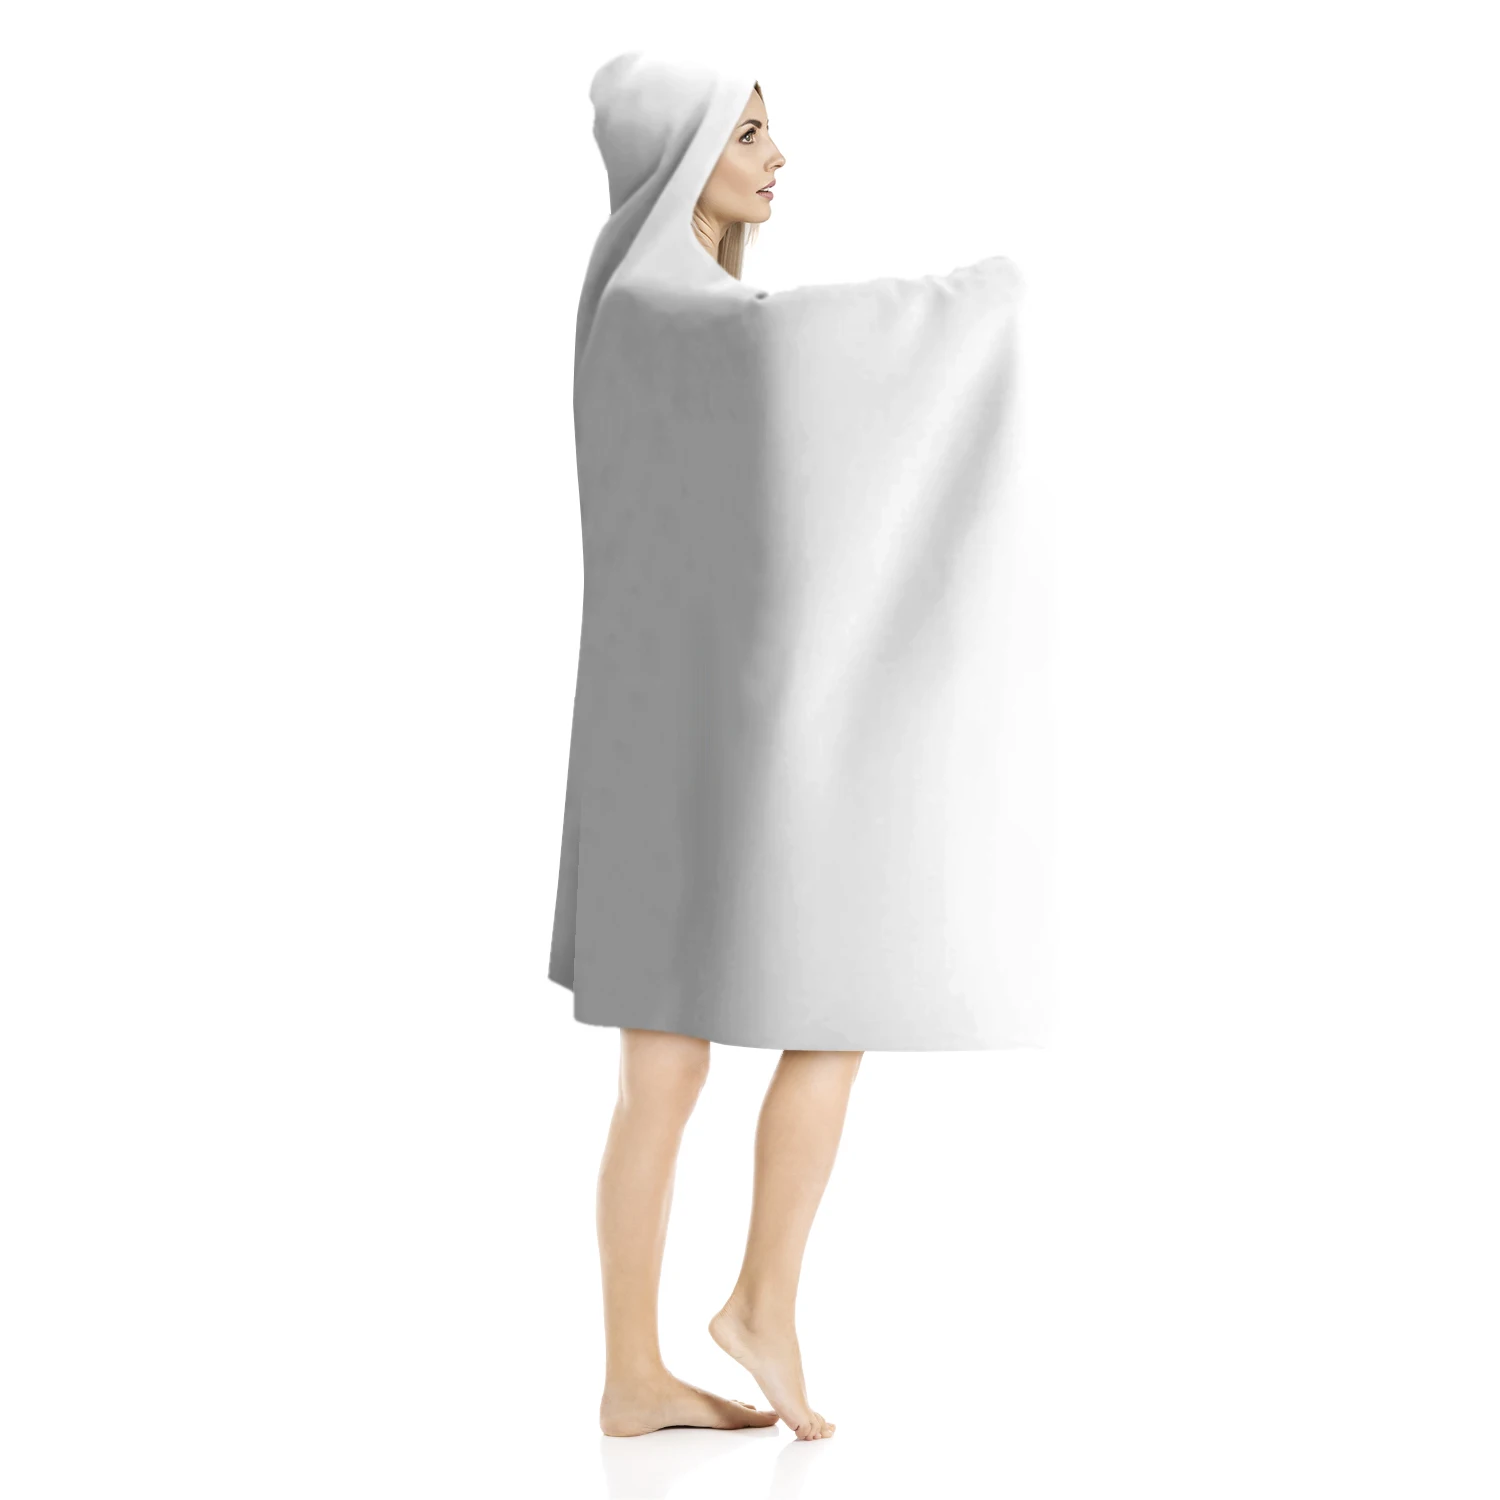 Outer galaxy universe home office winter prints OEM service wearable fleece wrap cloak hooded blankets